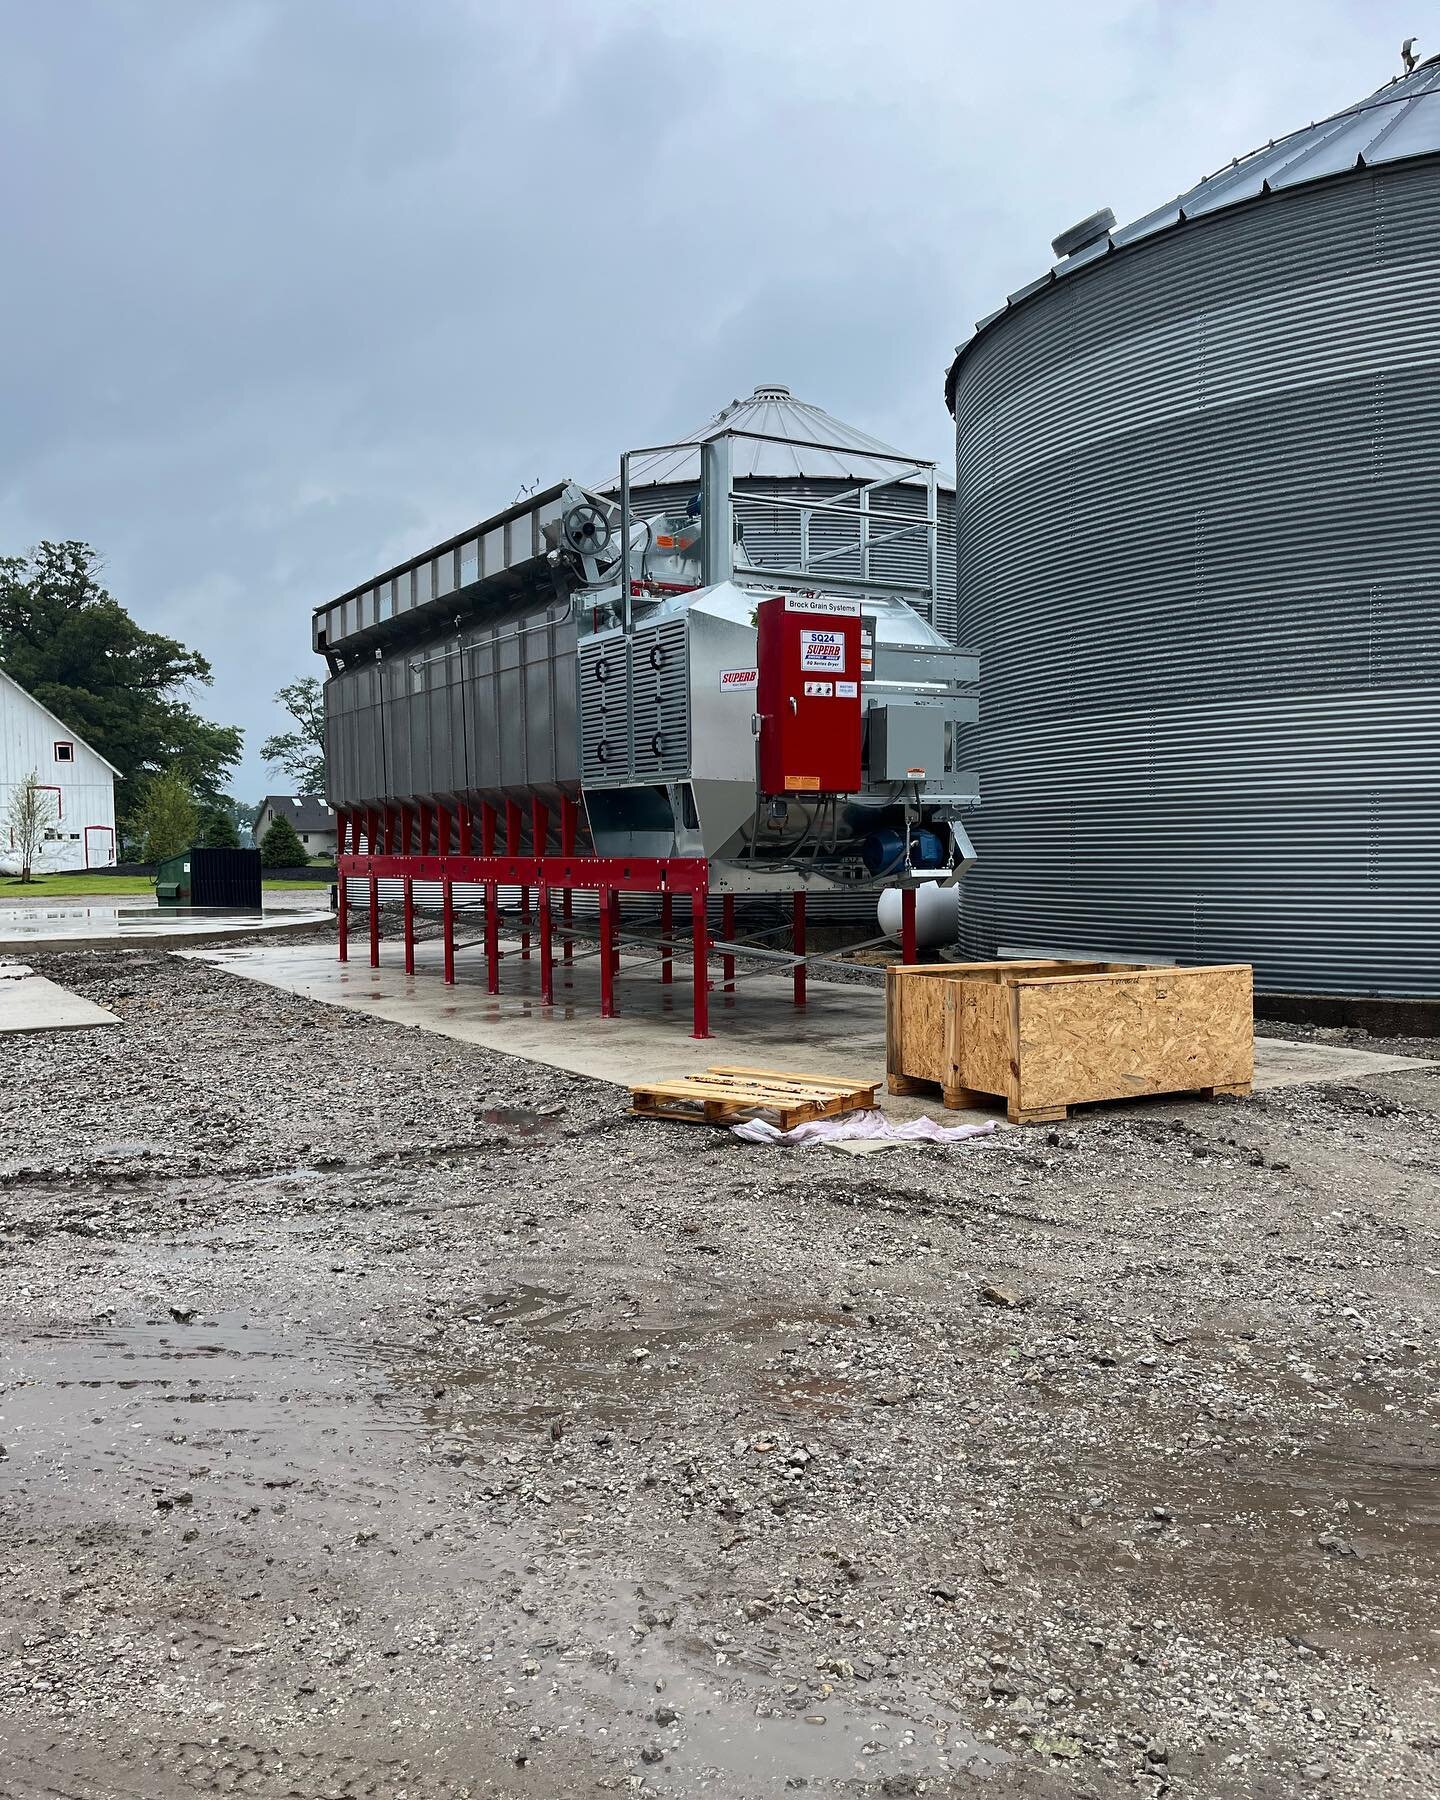 A new addition to the farm arrived today!  #graindryer #grainharvest #grainfarmer #agriculture #brockdryer #brockgrainbins